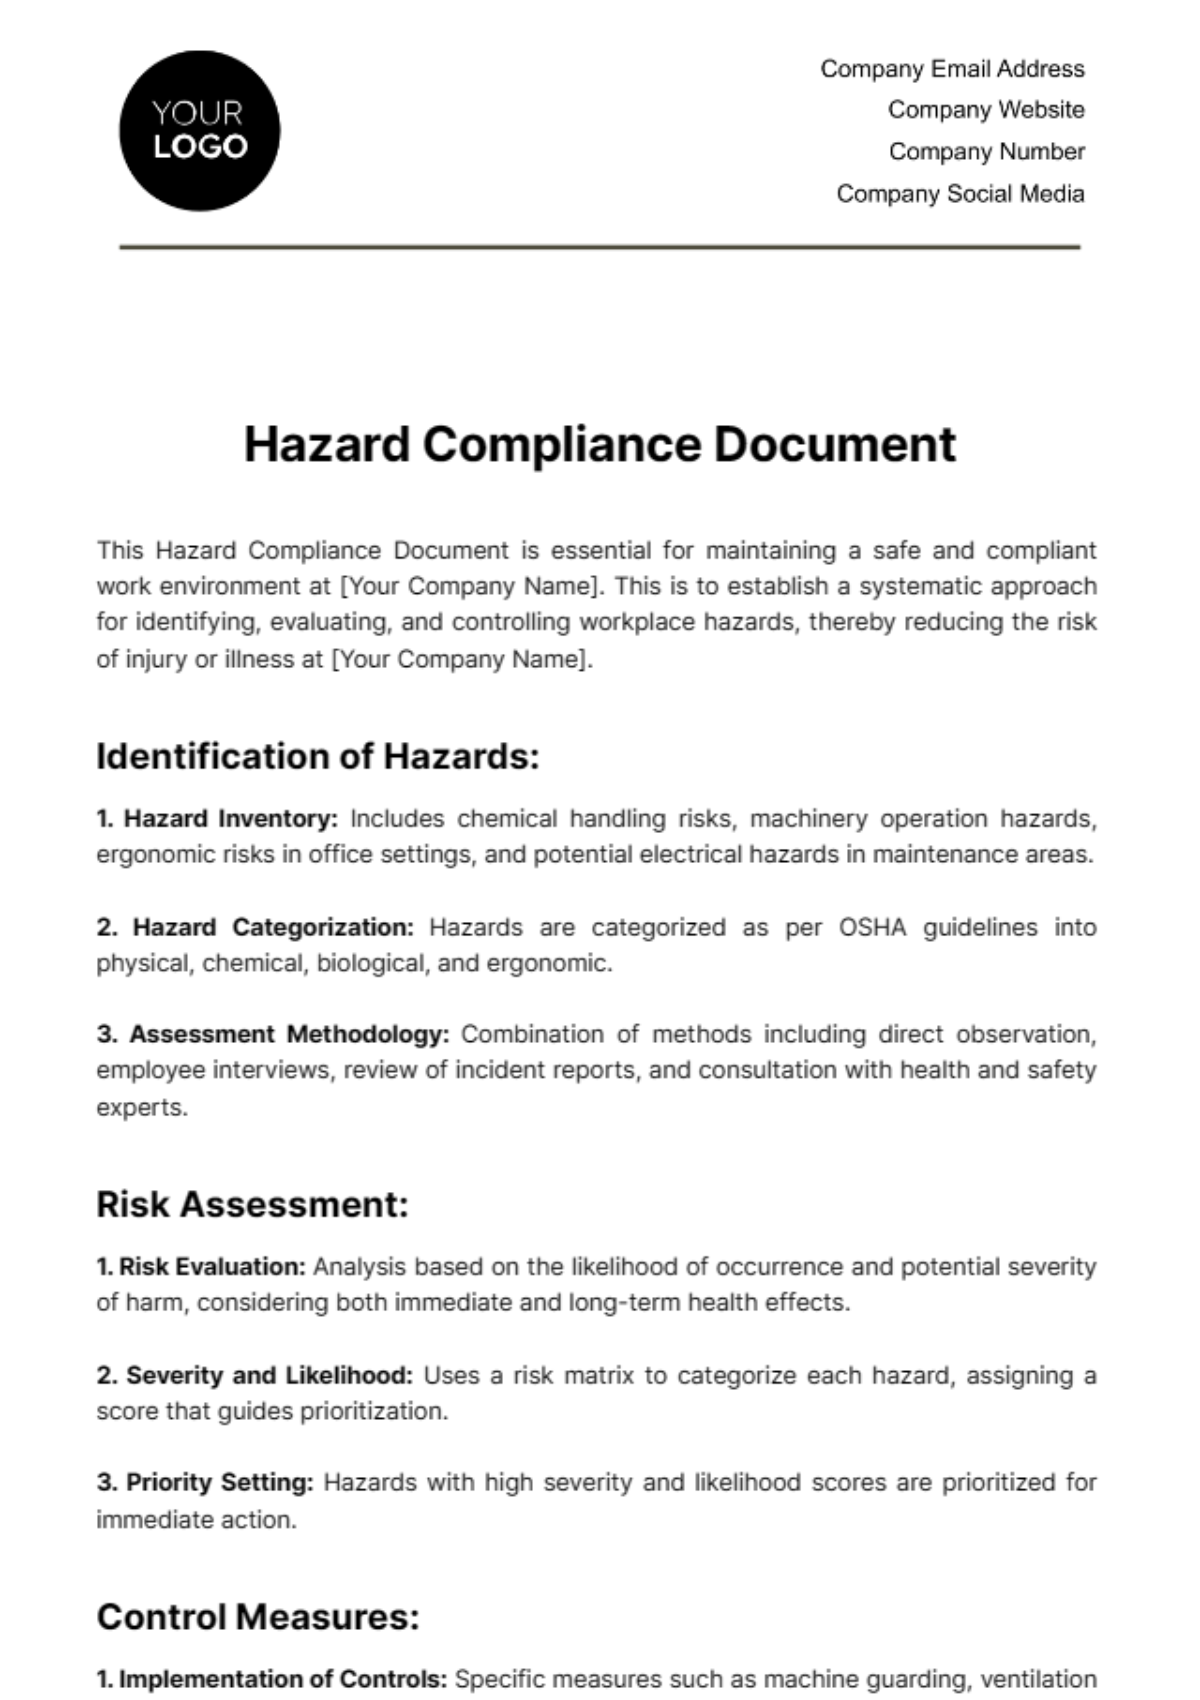 Free Hazard Compliance Document Template